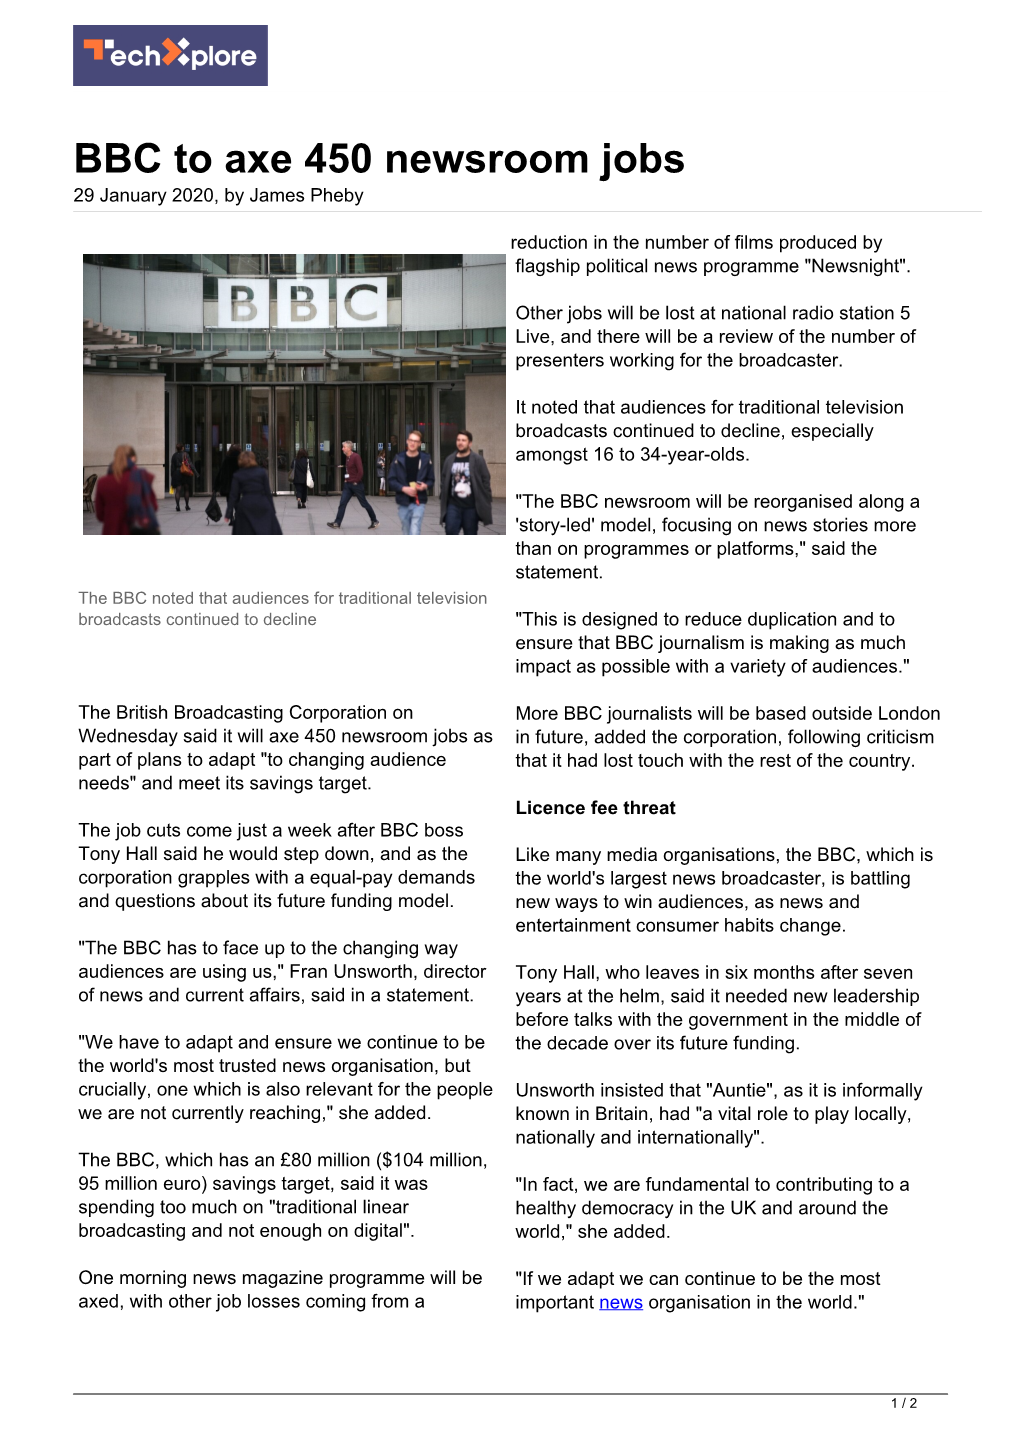 BBC to Axe 450 Newsroom Jobs 29 January 2020, by James Pheby